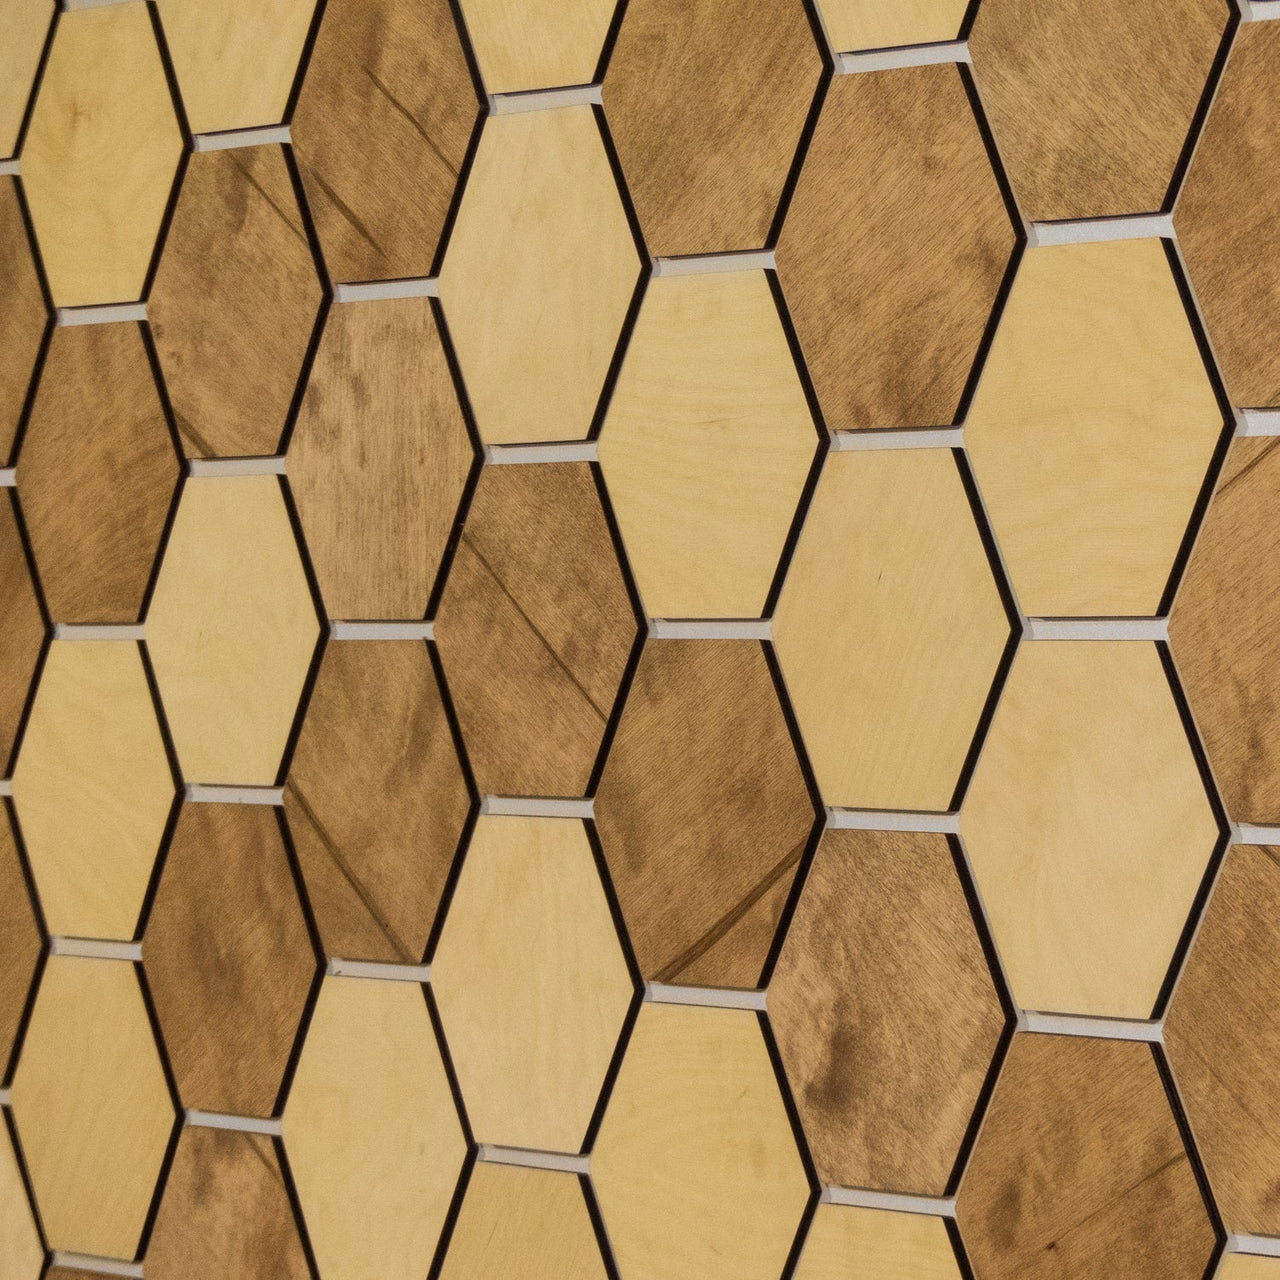 Medium and Light Hexagon Wooden Wall Panels by Hexagonica